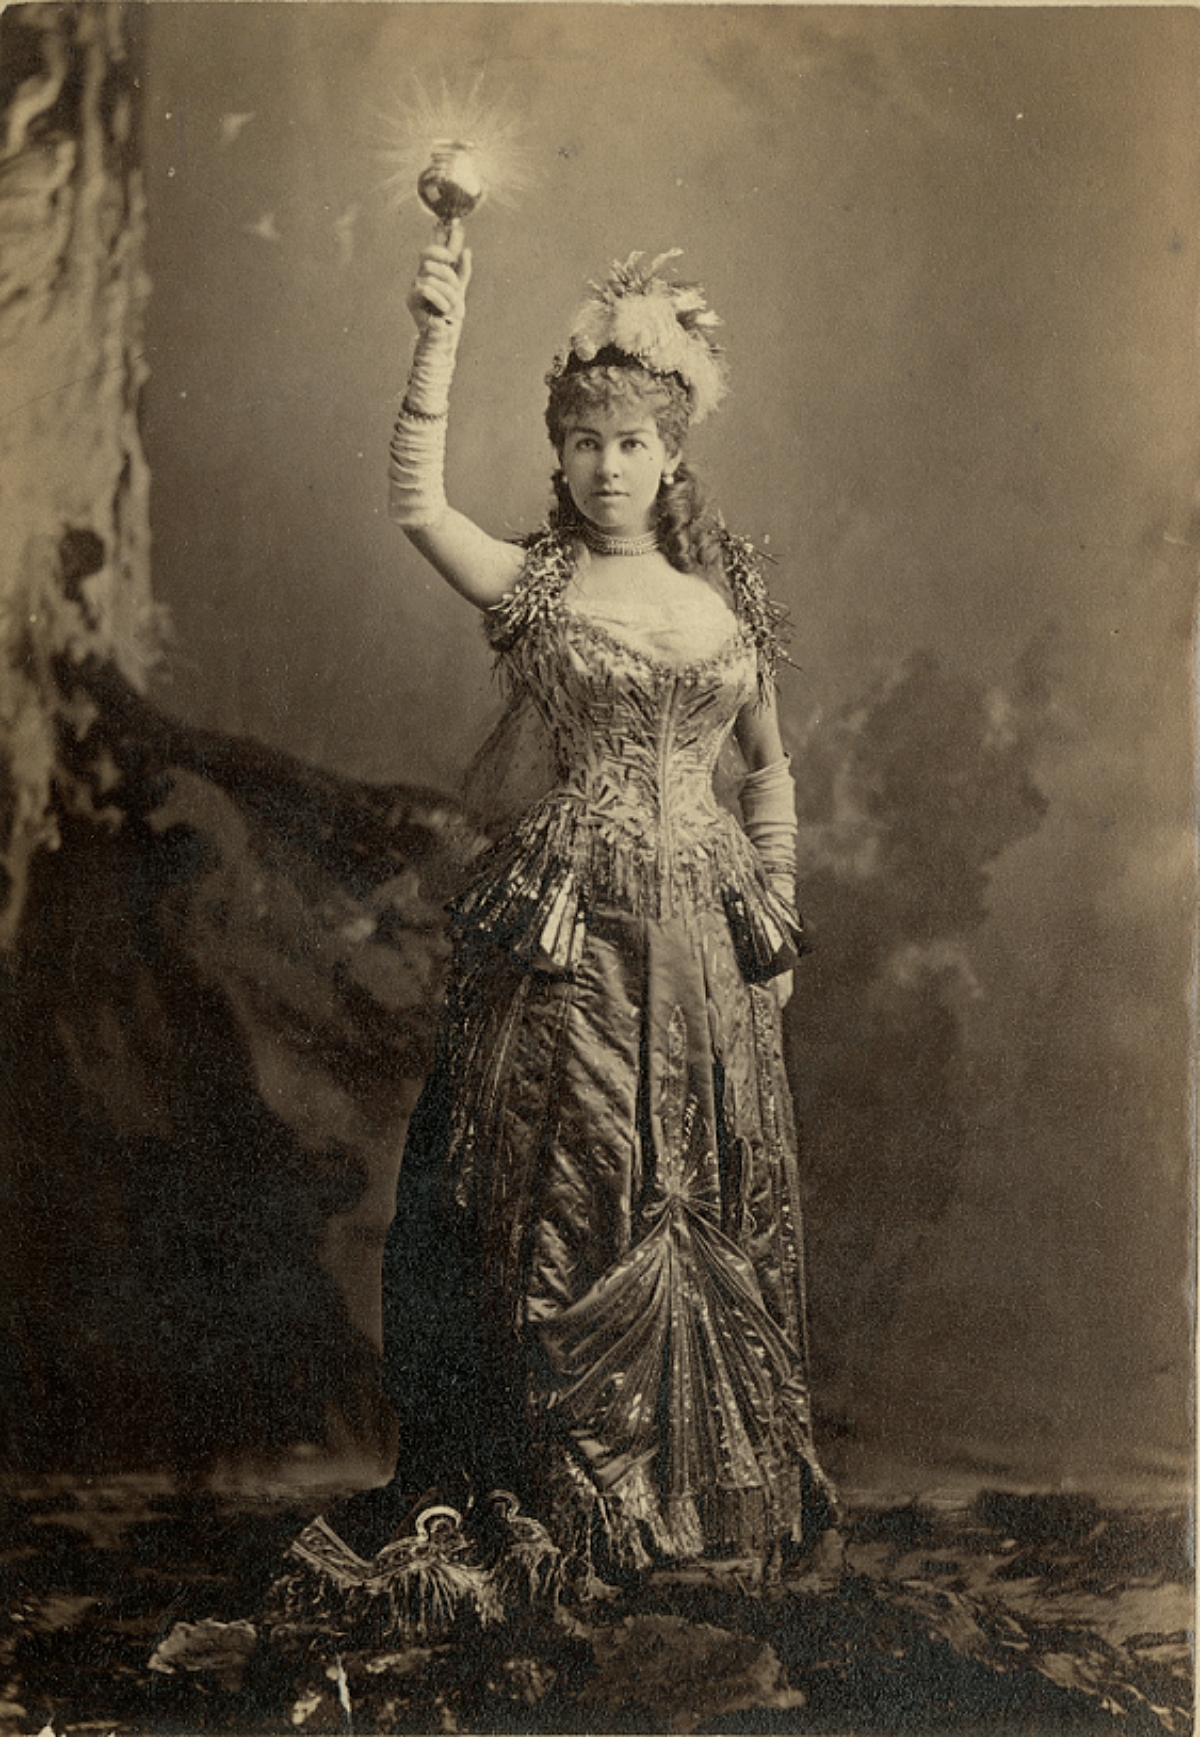 Mrs. Cornelius Vanderbilt II in 1883 as Electrical Light